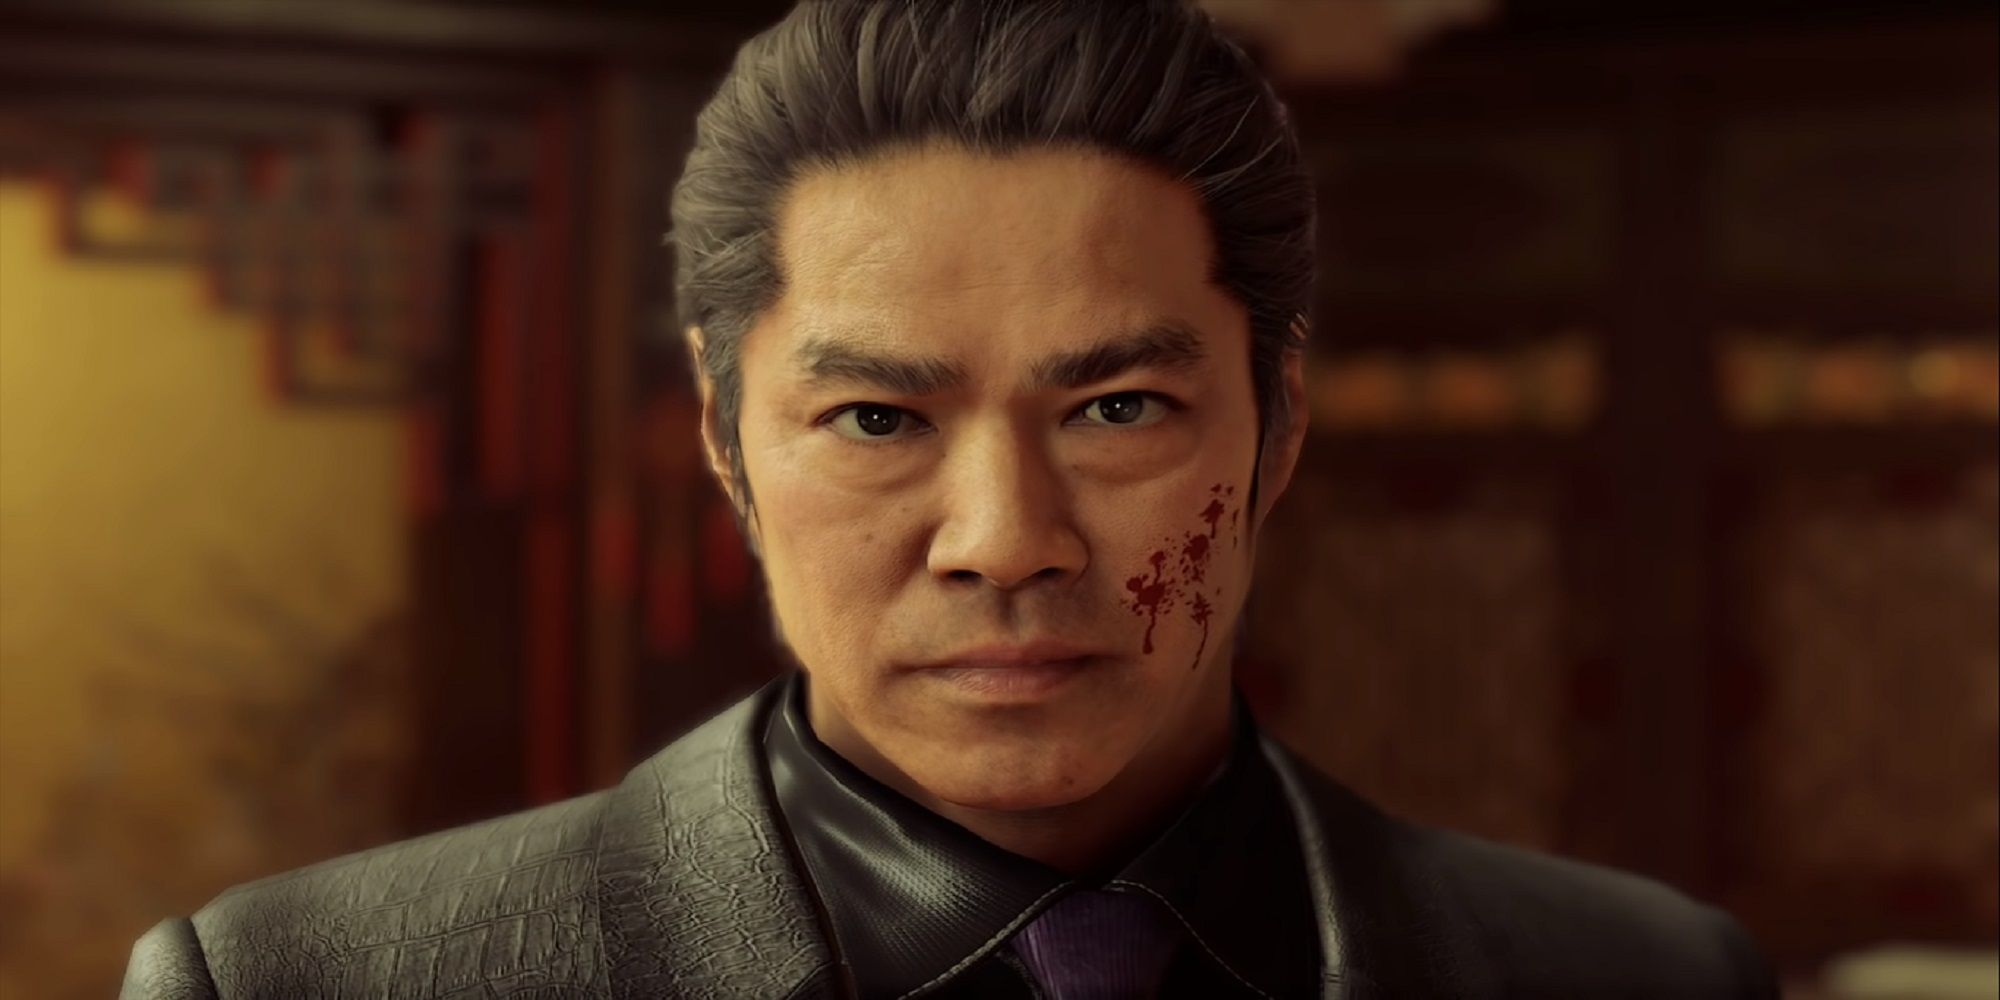 yakuza Sawashiro with bloodstain